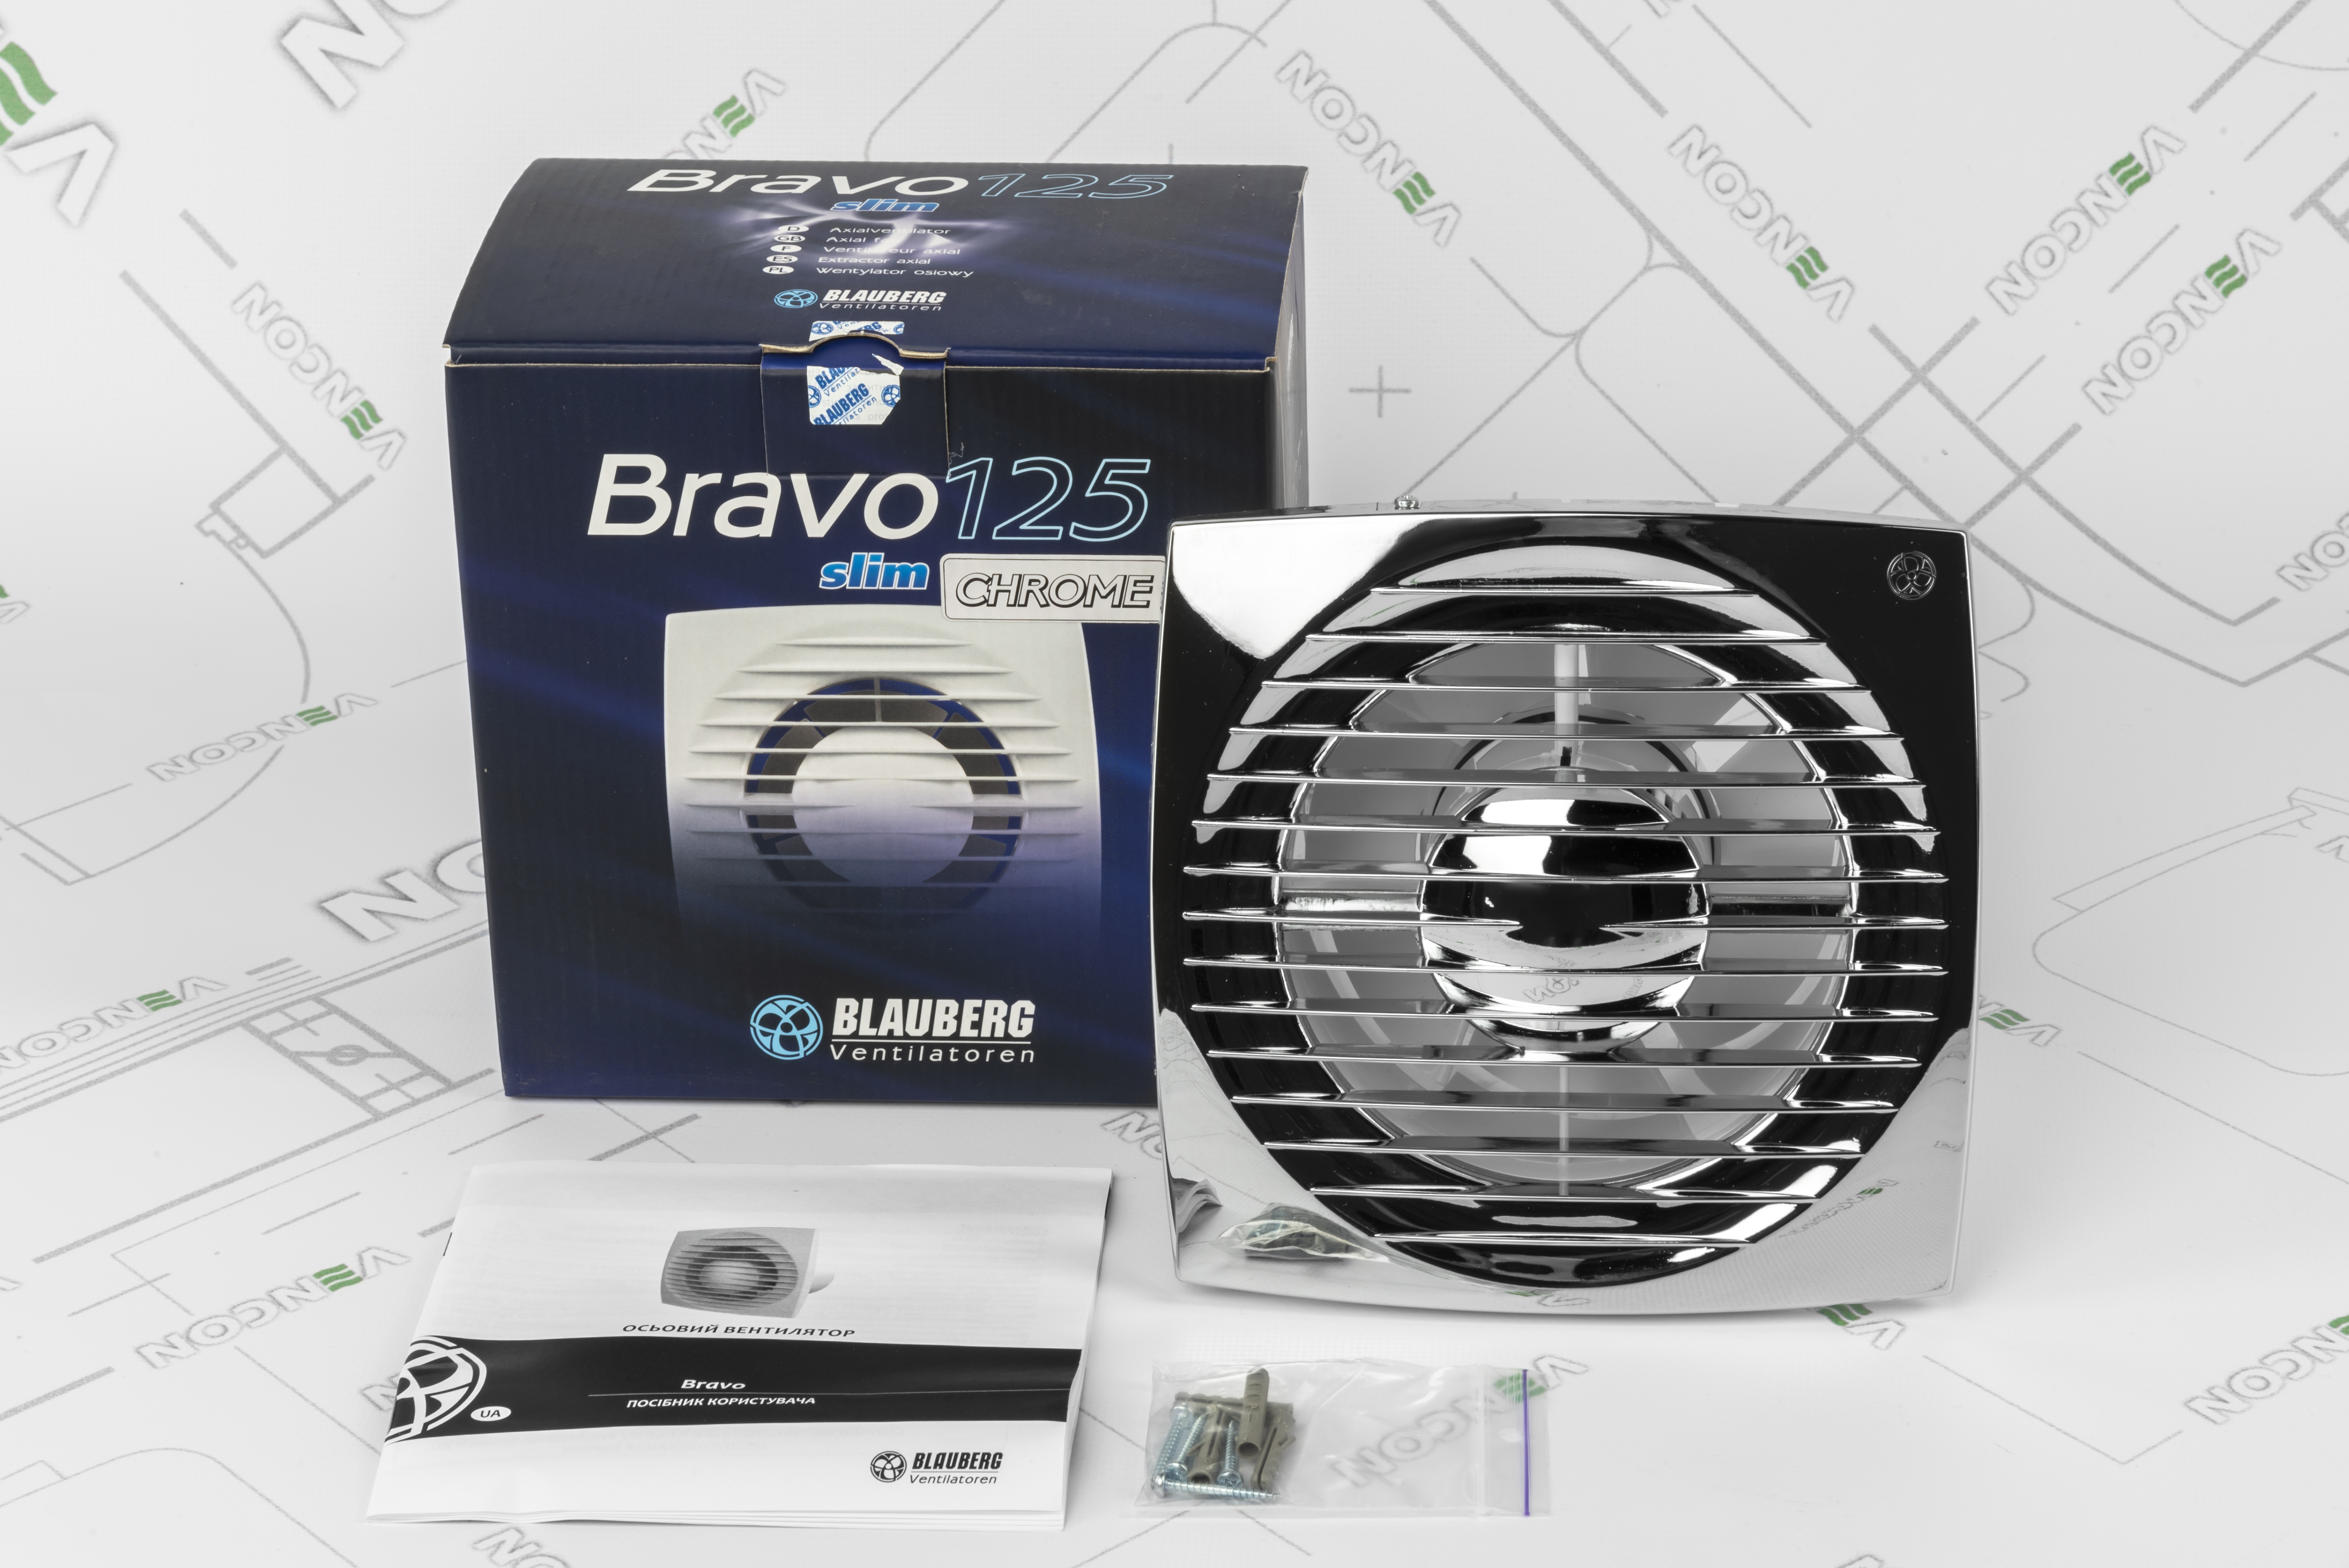 Вытяжной вентилятор Blauberg Bravo Chrome 125 характеристики - фотография 7